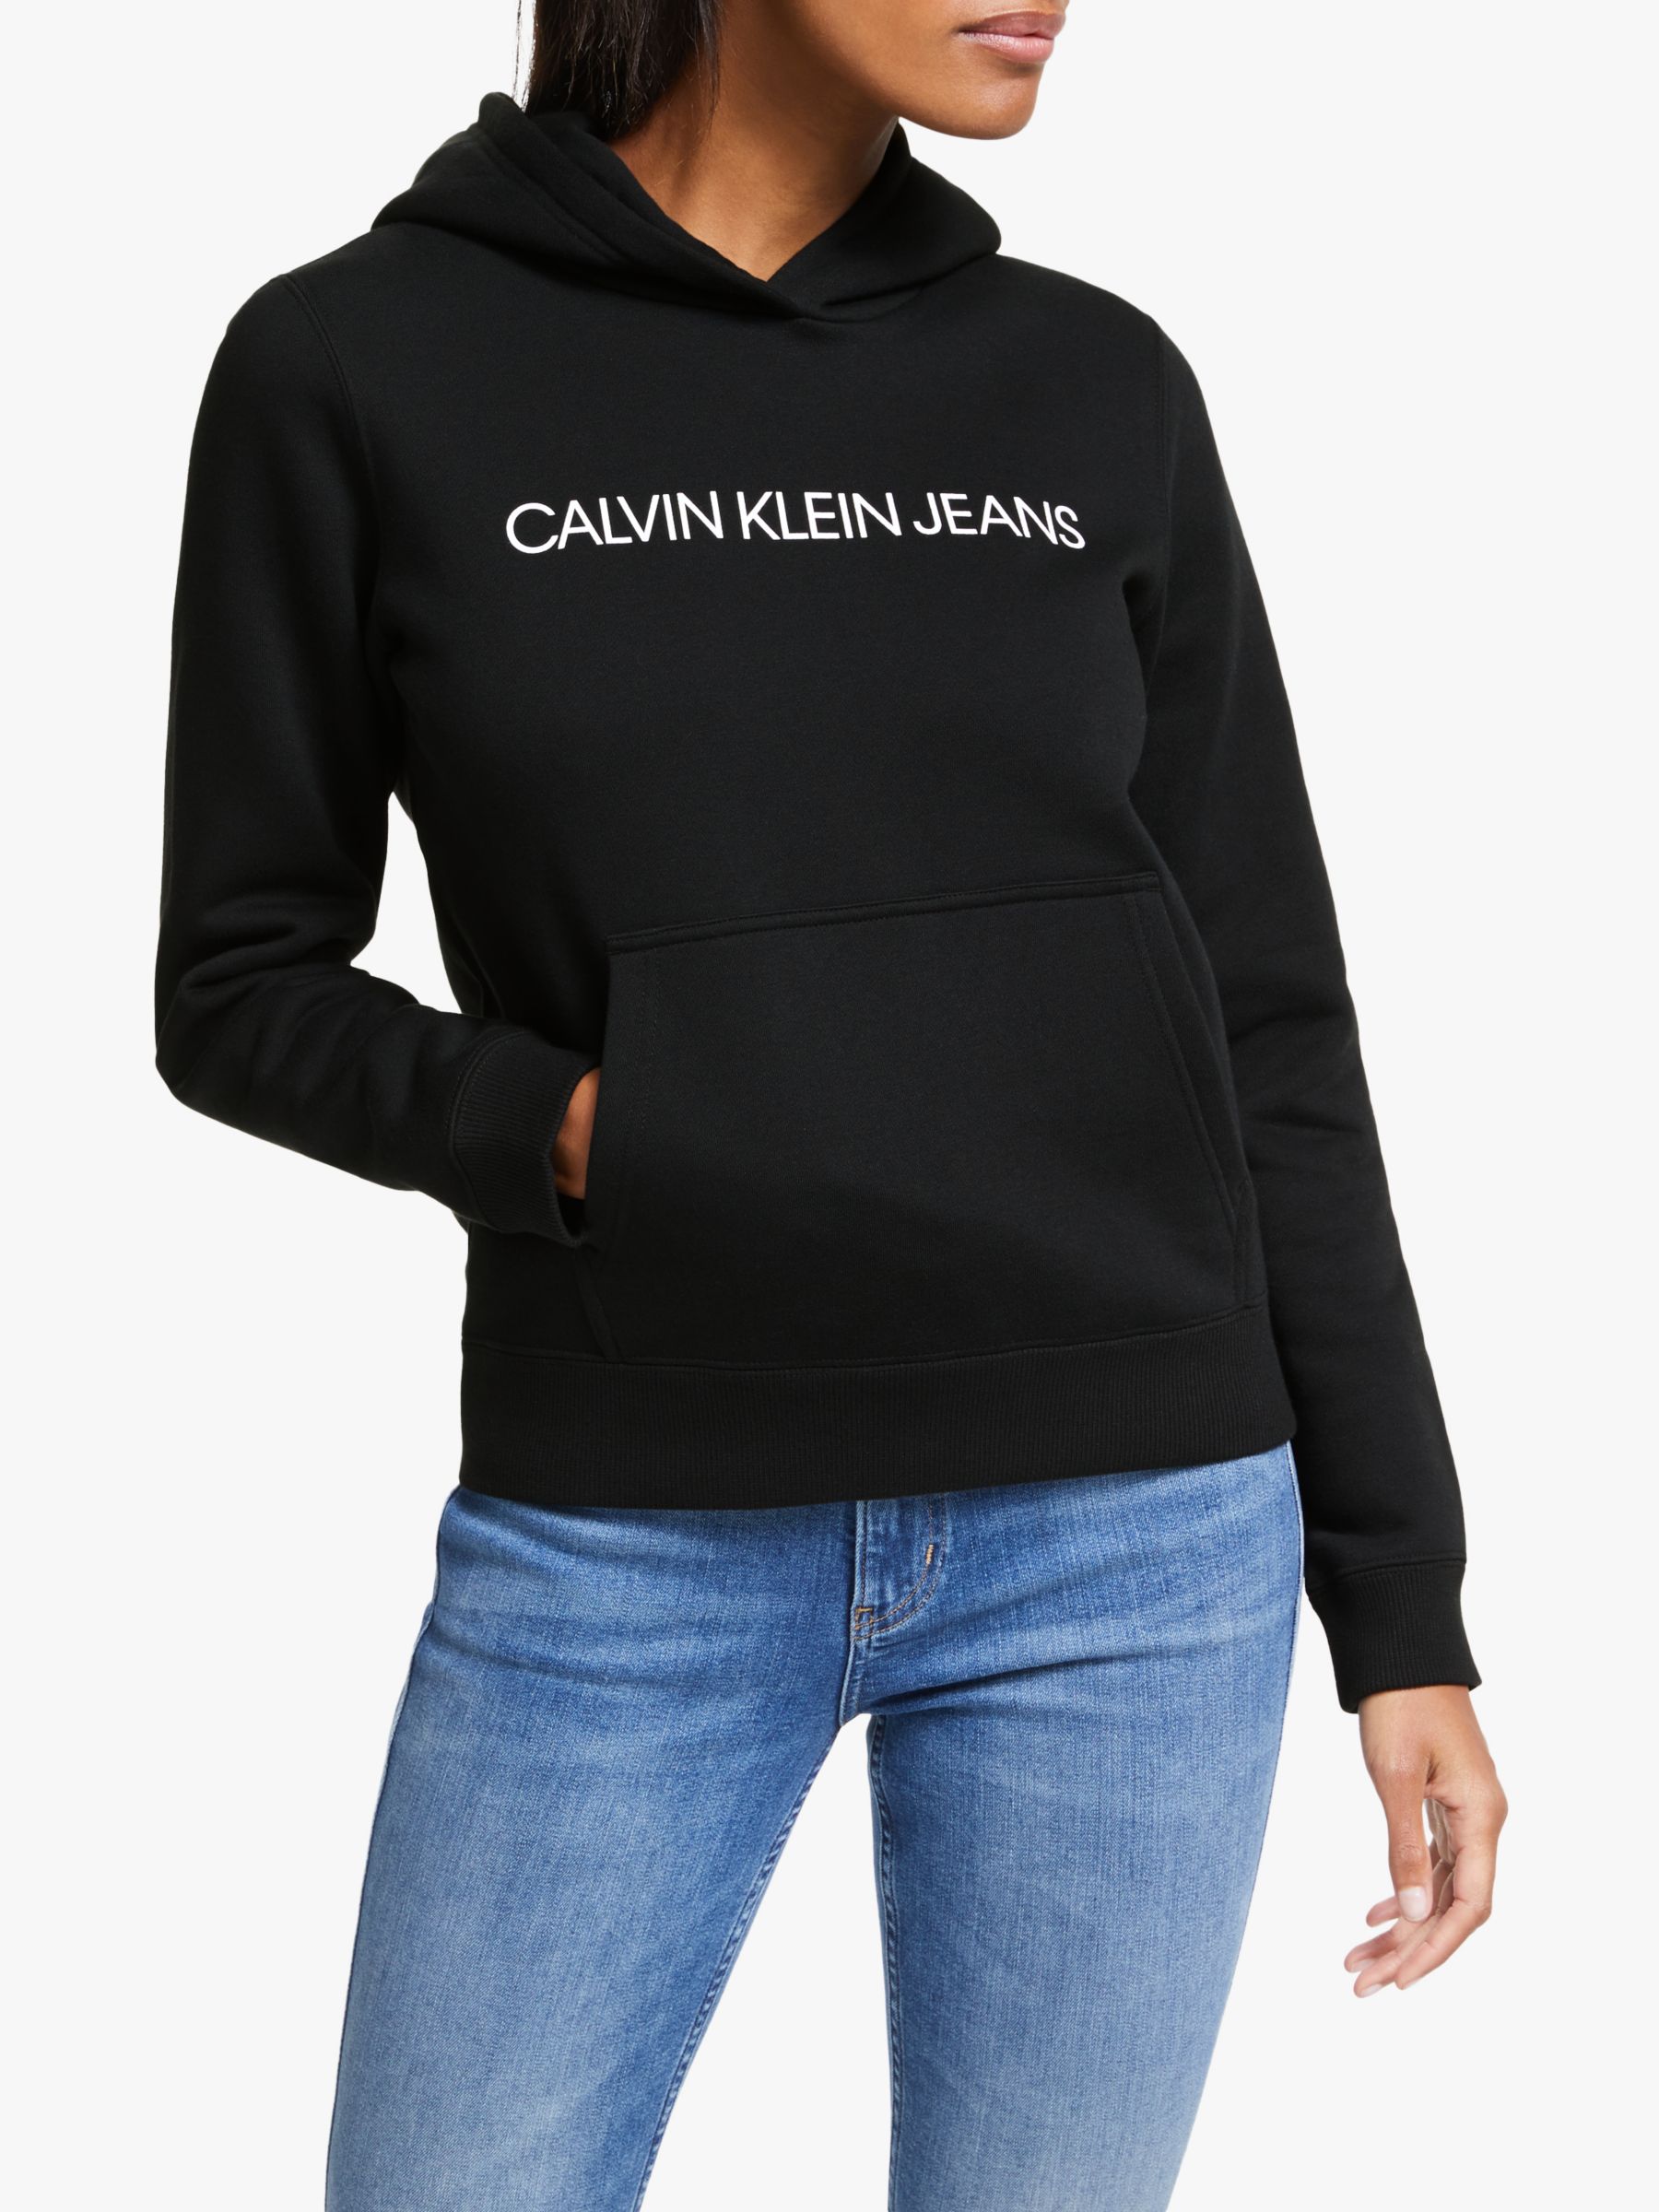 calvin klein hoodie women's black